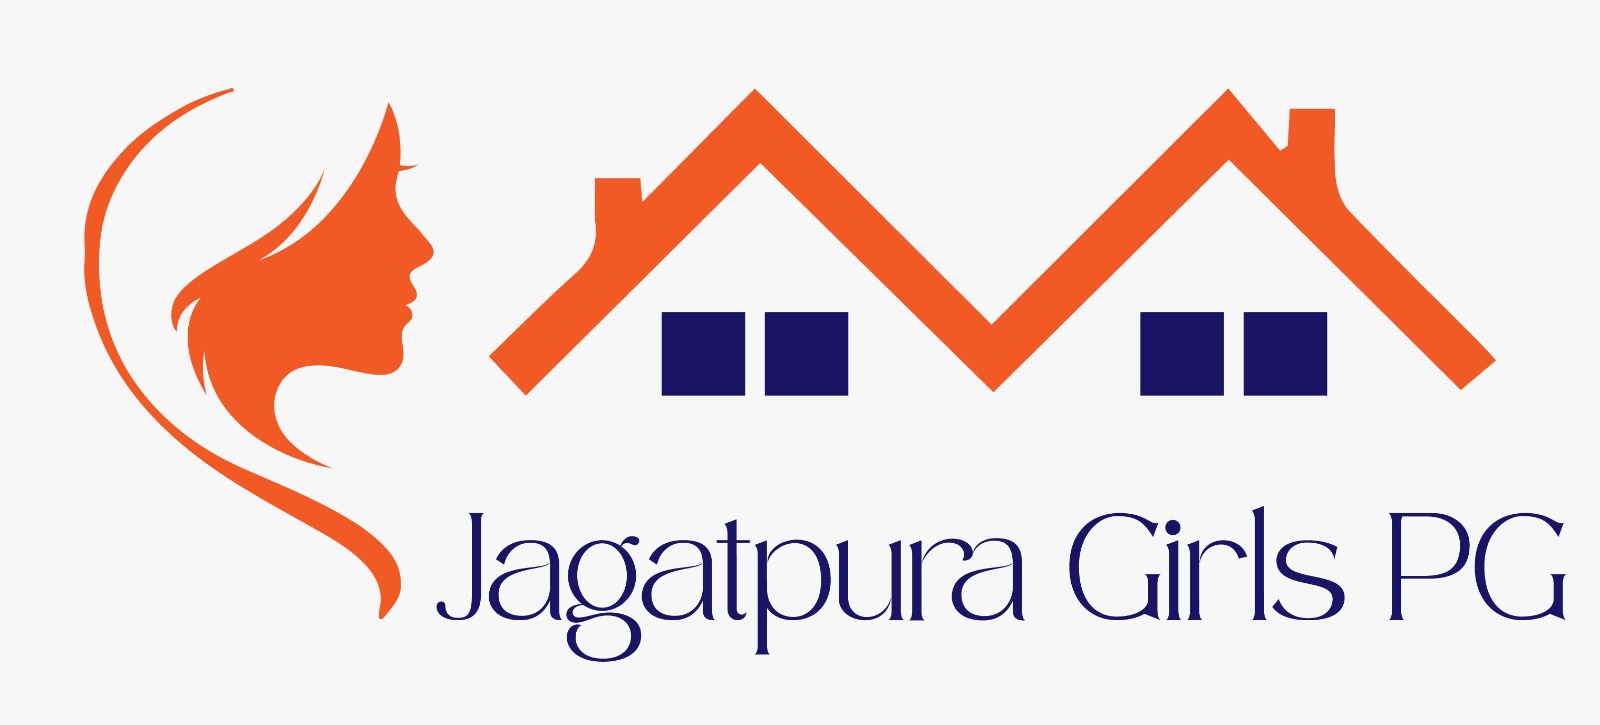 jagatpura girls pg | rent services in jaipur